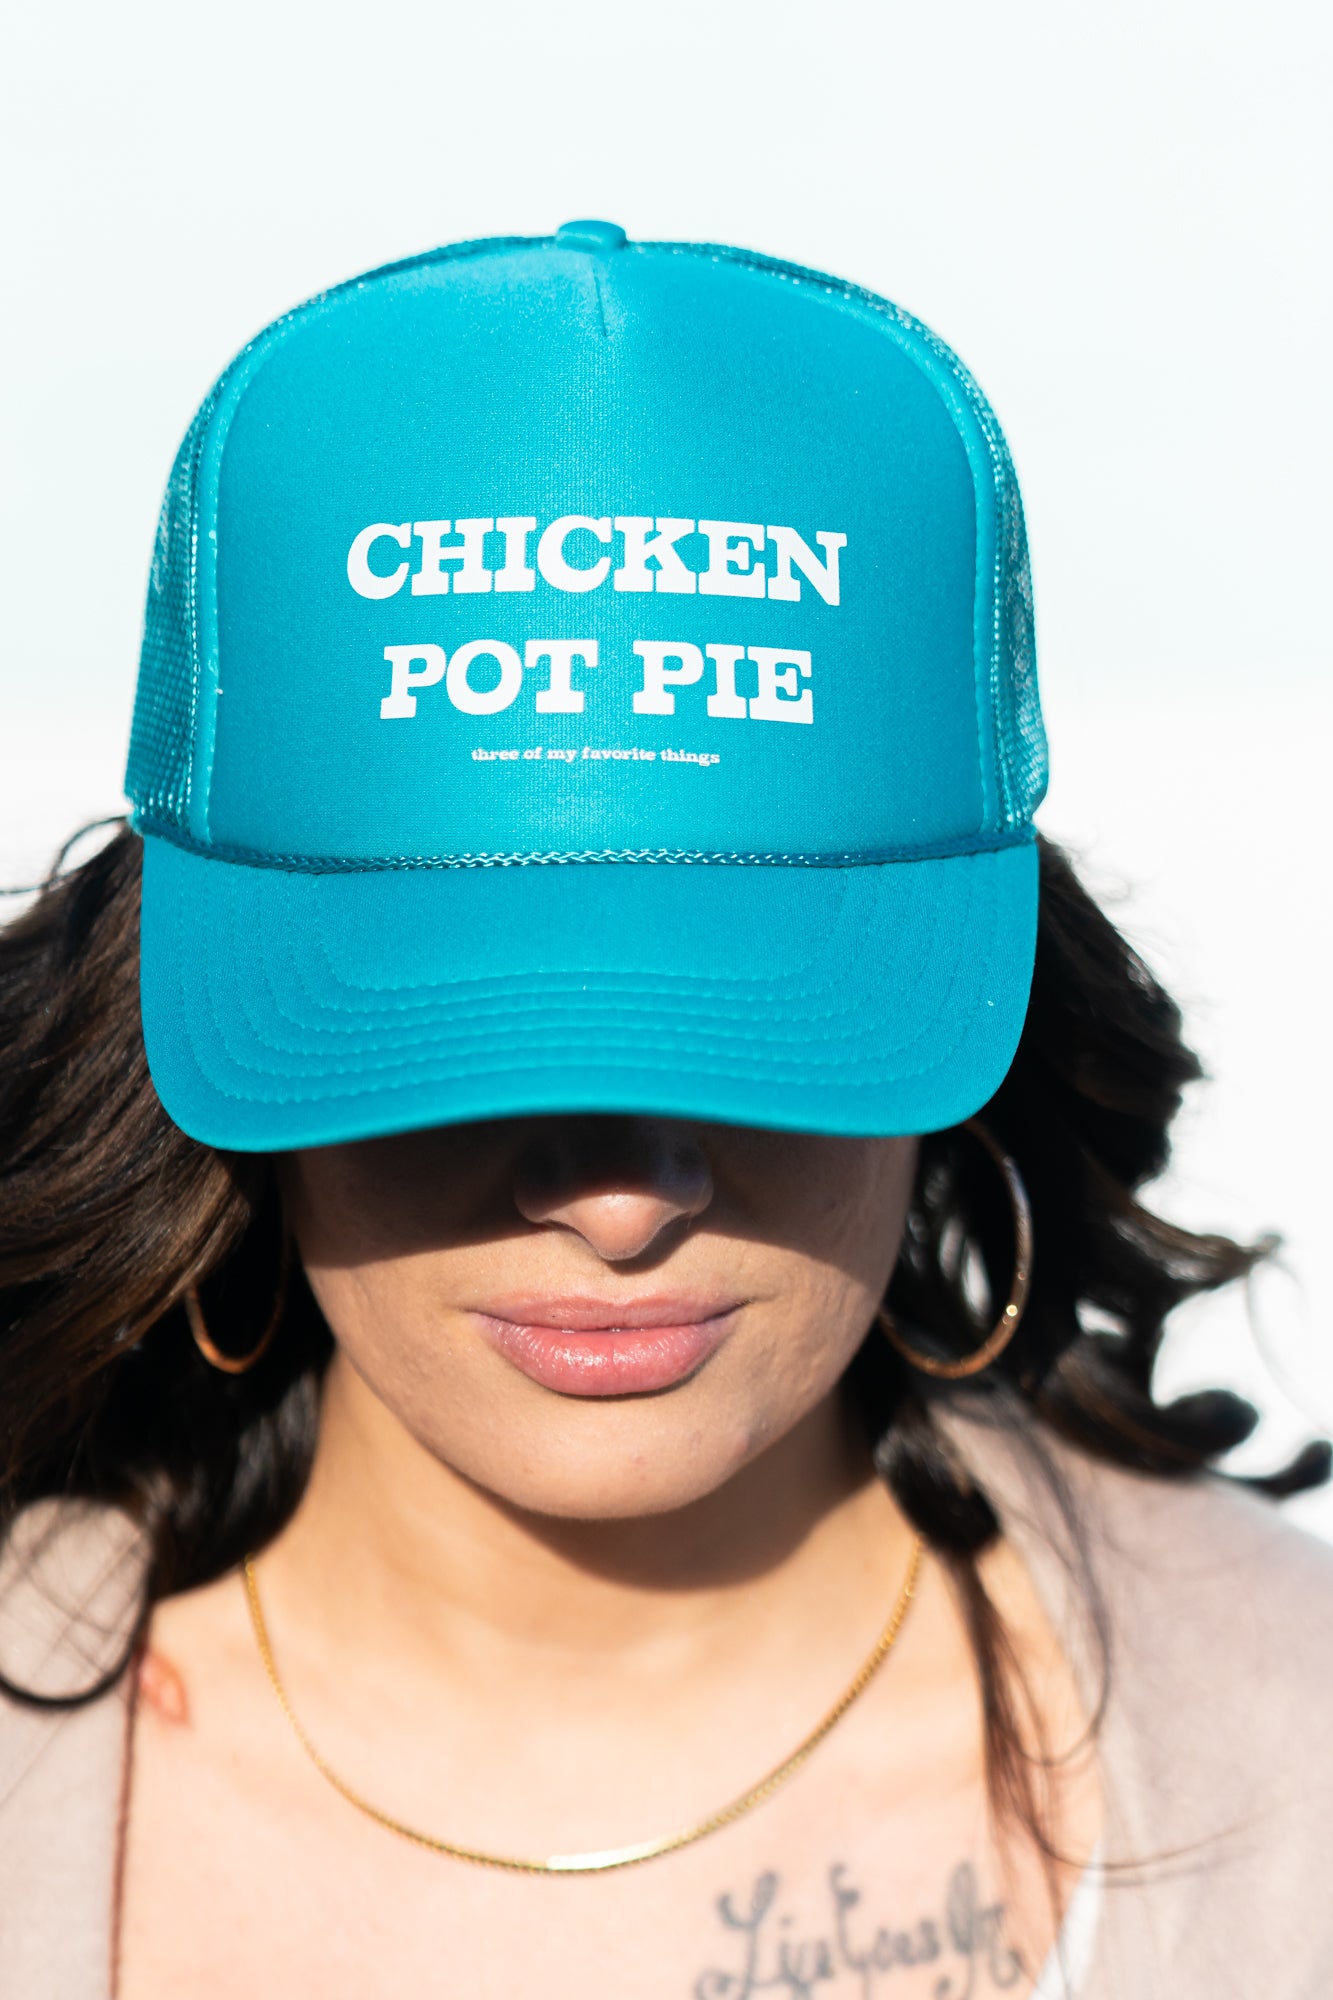 Chicken Pot Pie (Three Of My Favorite Things) - Foam Trucker Hat (Teal)